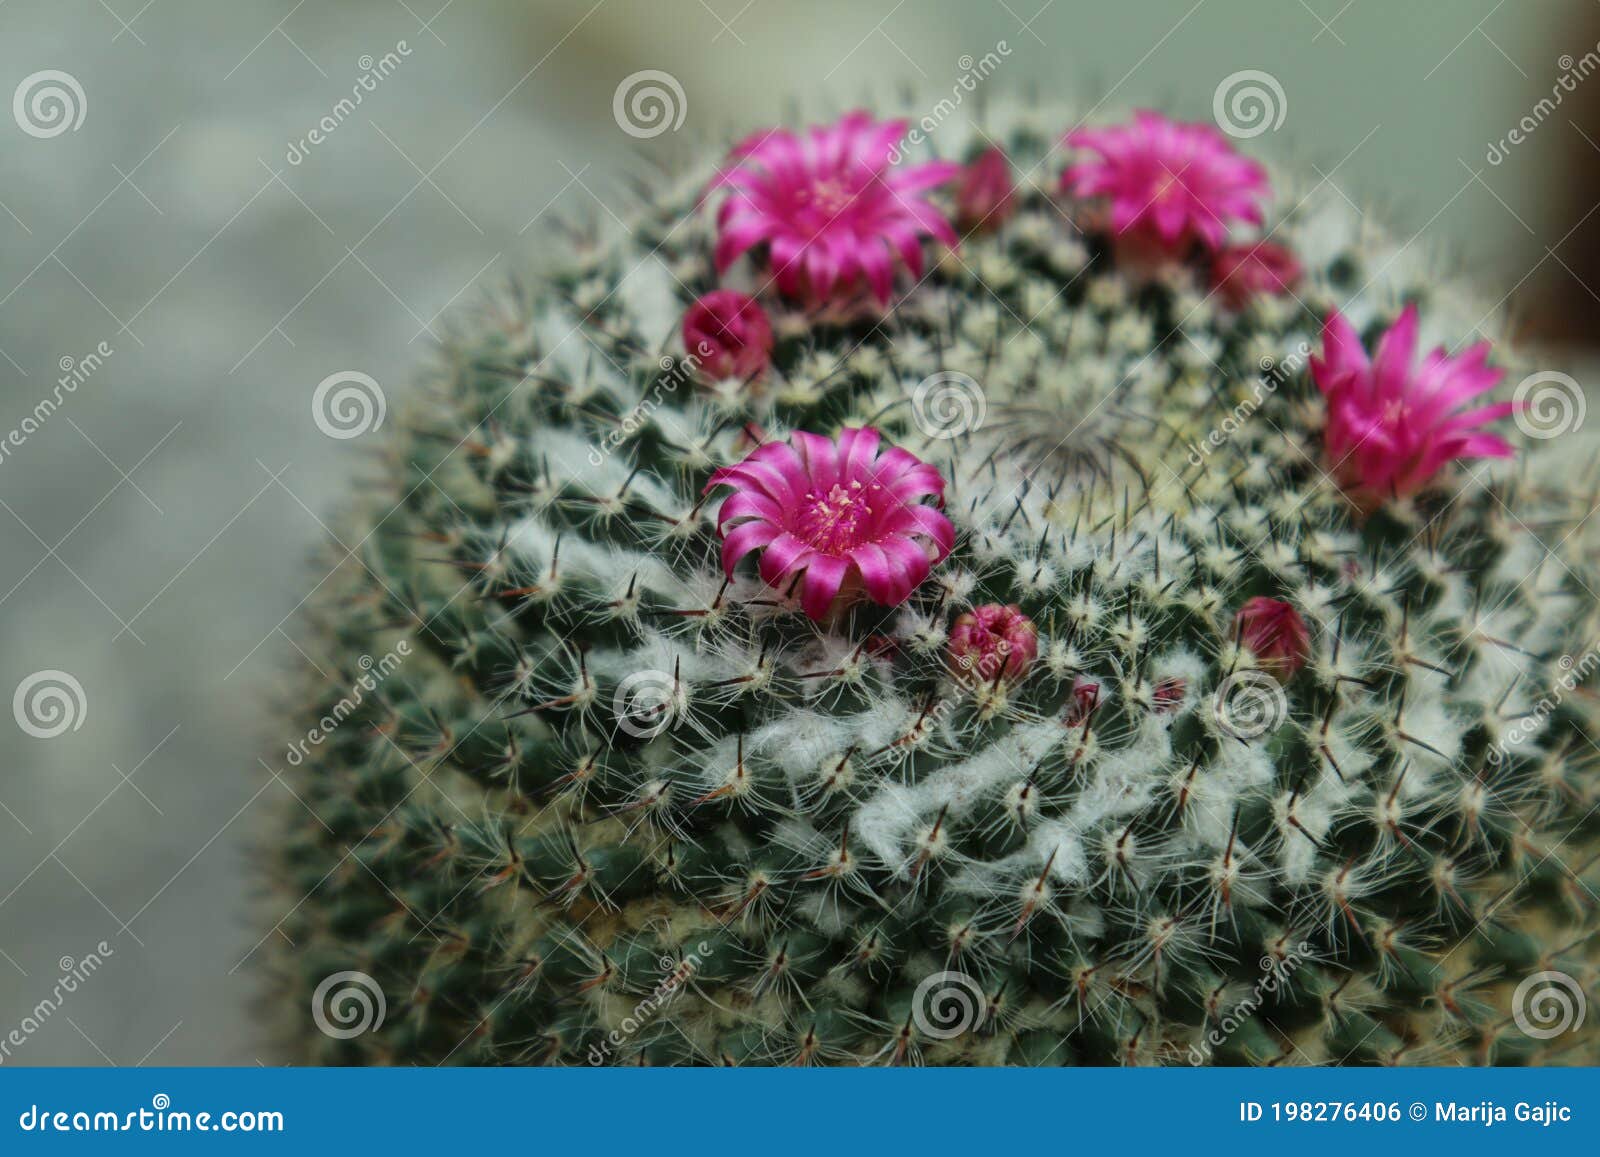 intensive purple flowers of the mamillaria cactus